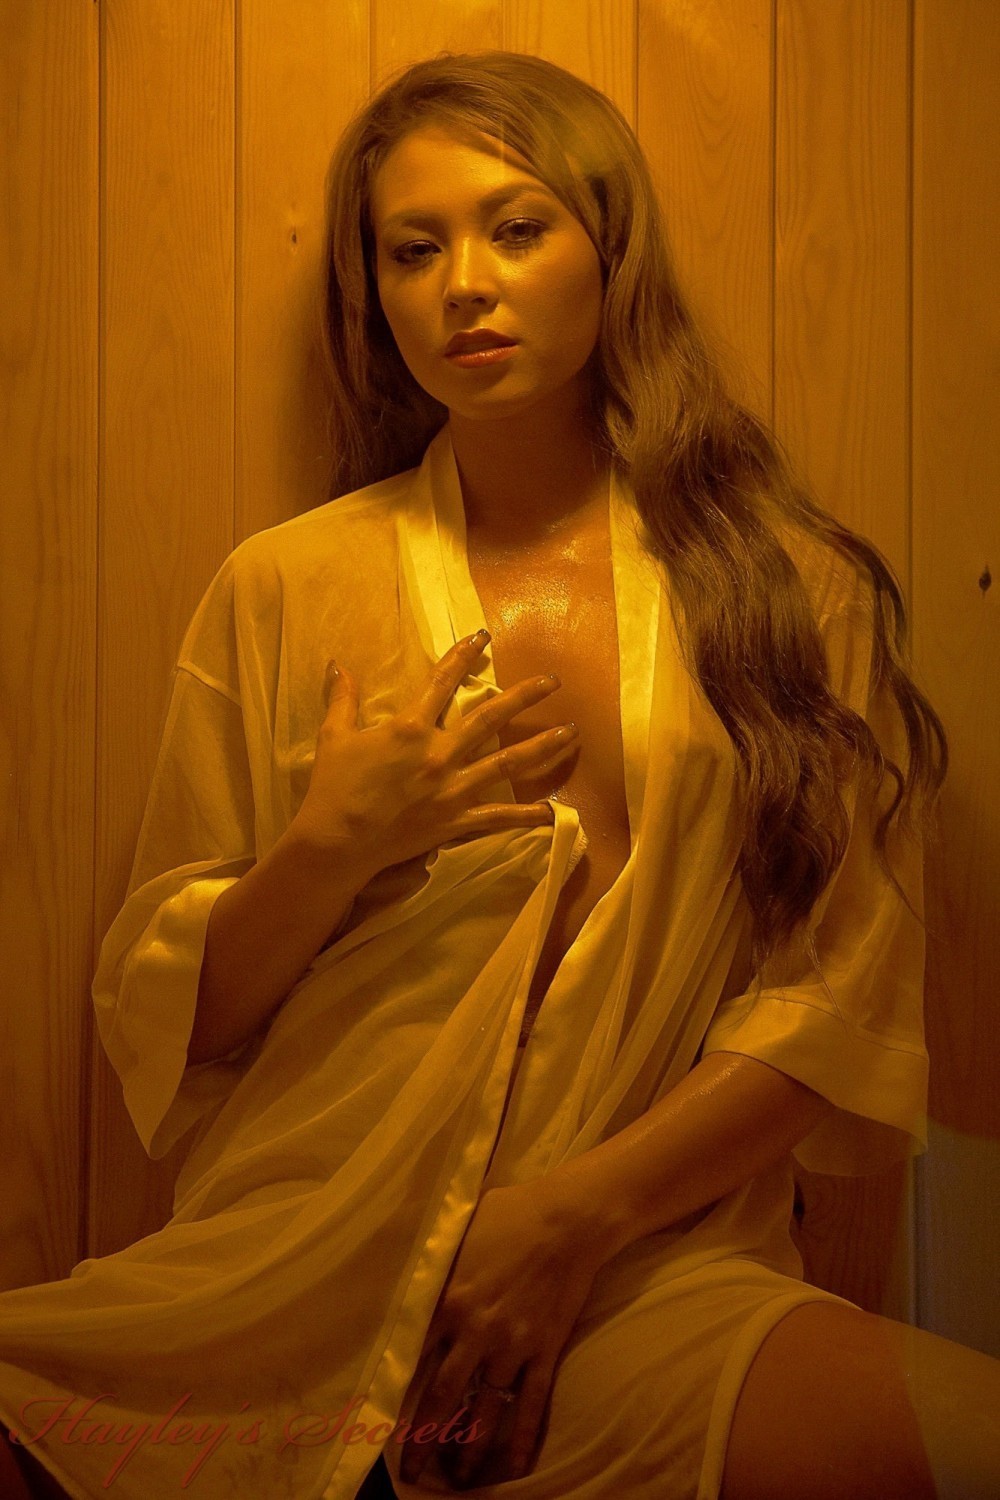 Beauty Natalia In The Sauna In Her Sheer White Shirt